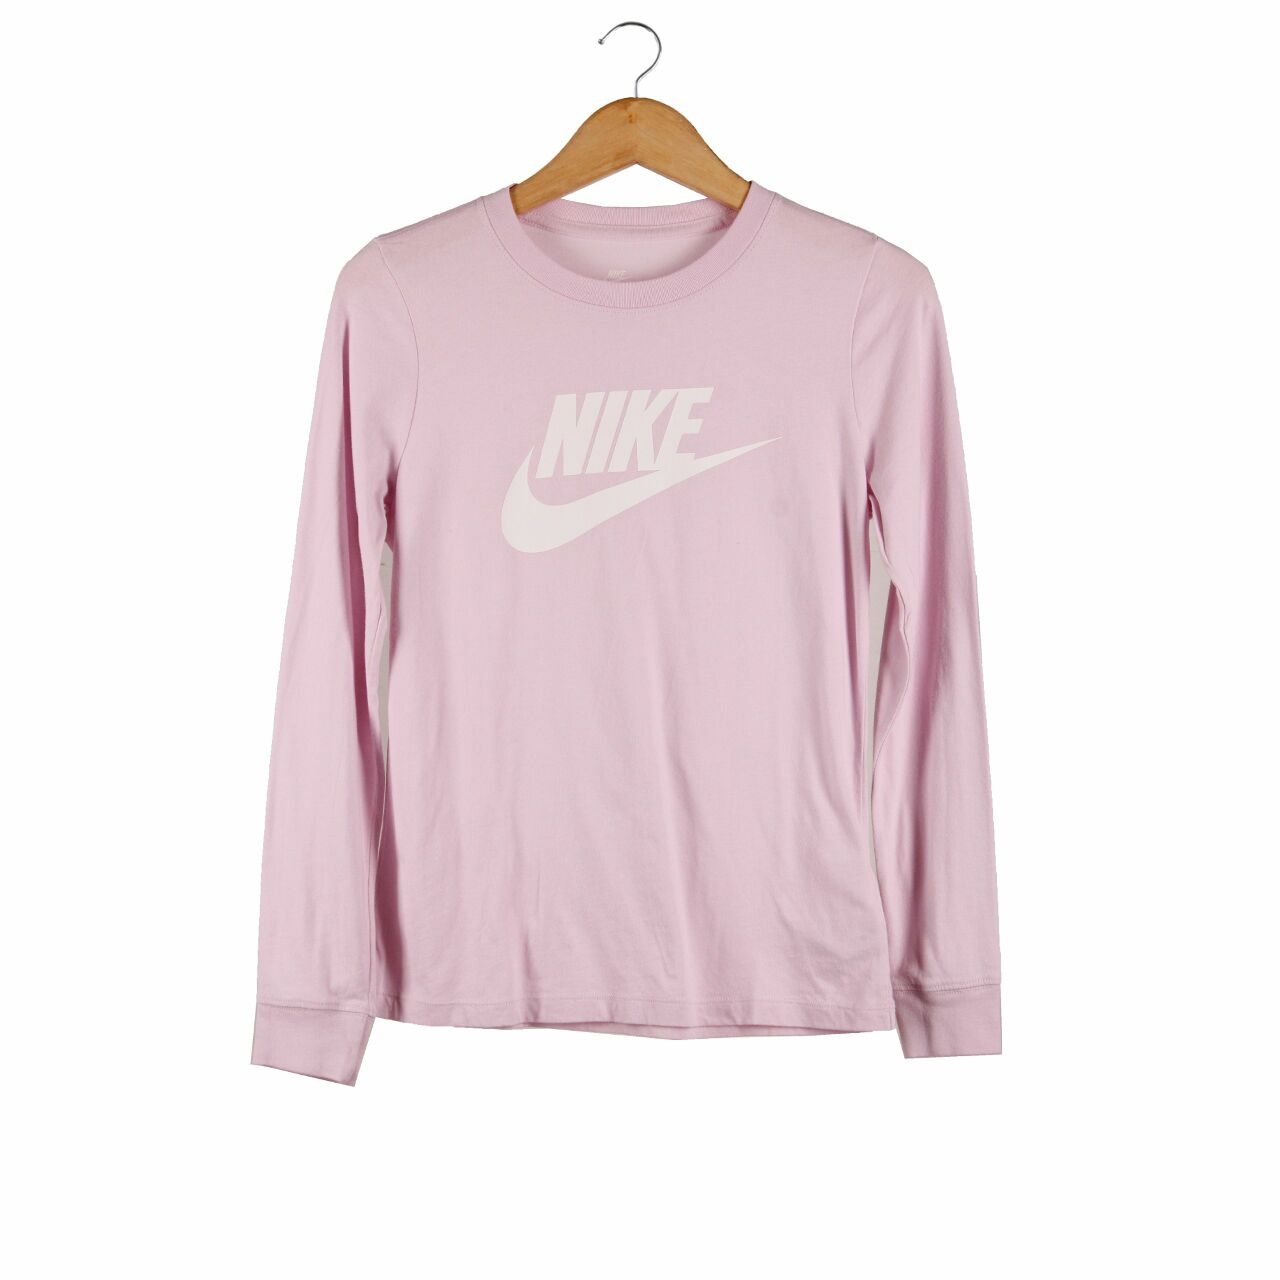 Nike Lilac Long Sleeve T-Shirt